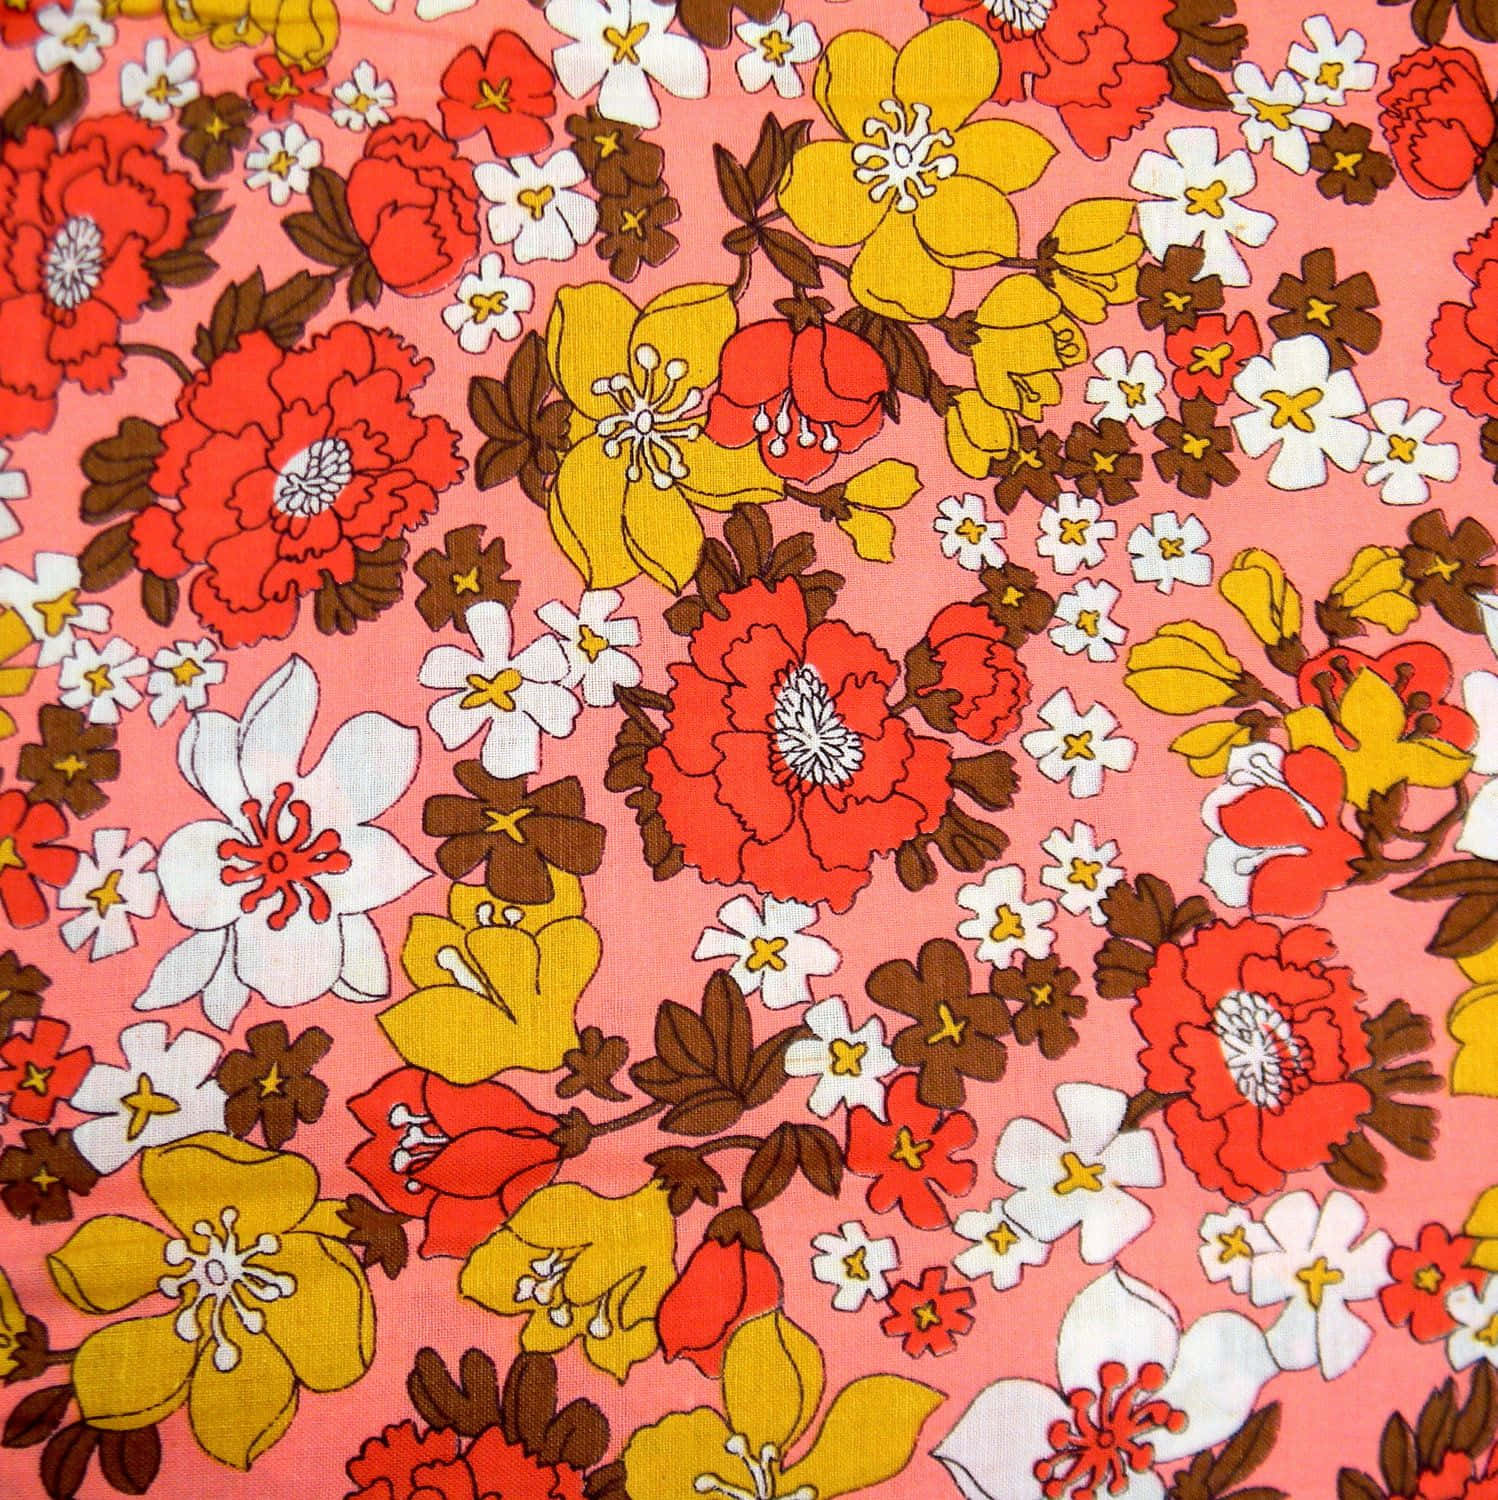 Premium Vector  Retro floral seamless pattern in 70s 60s style flower  child hippie style summer floral wild